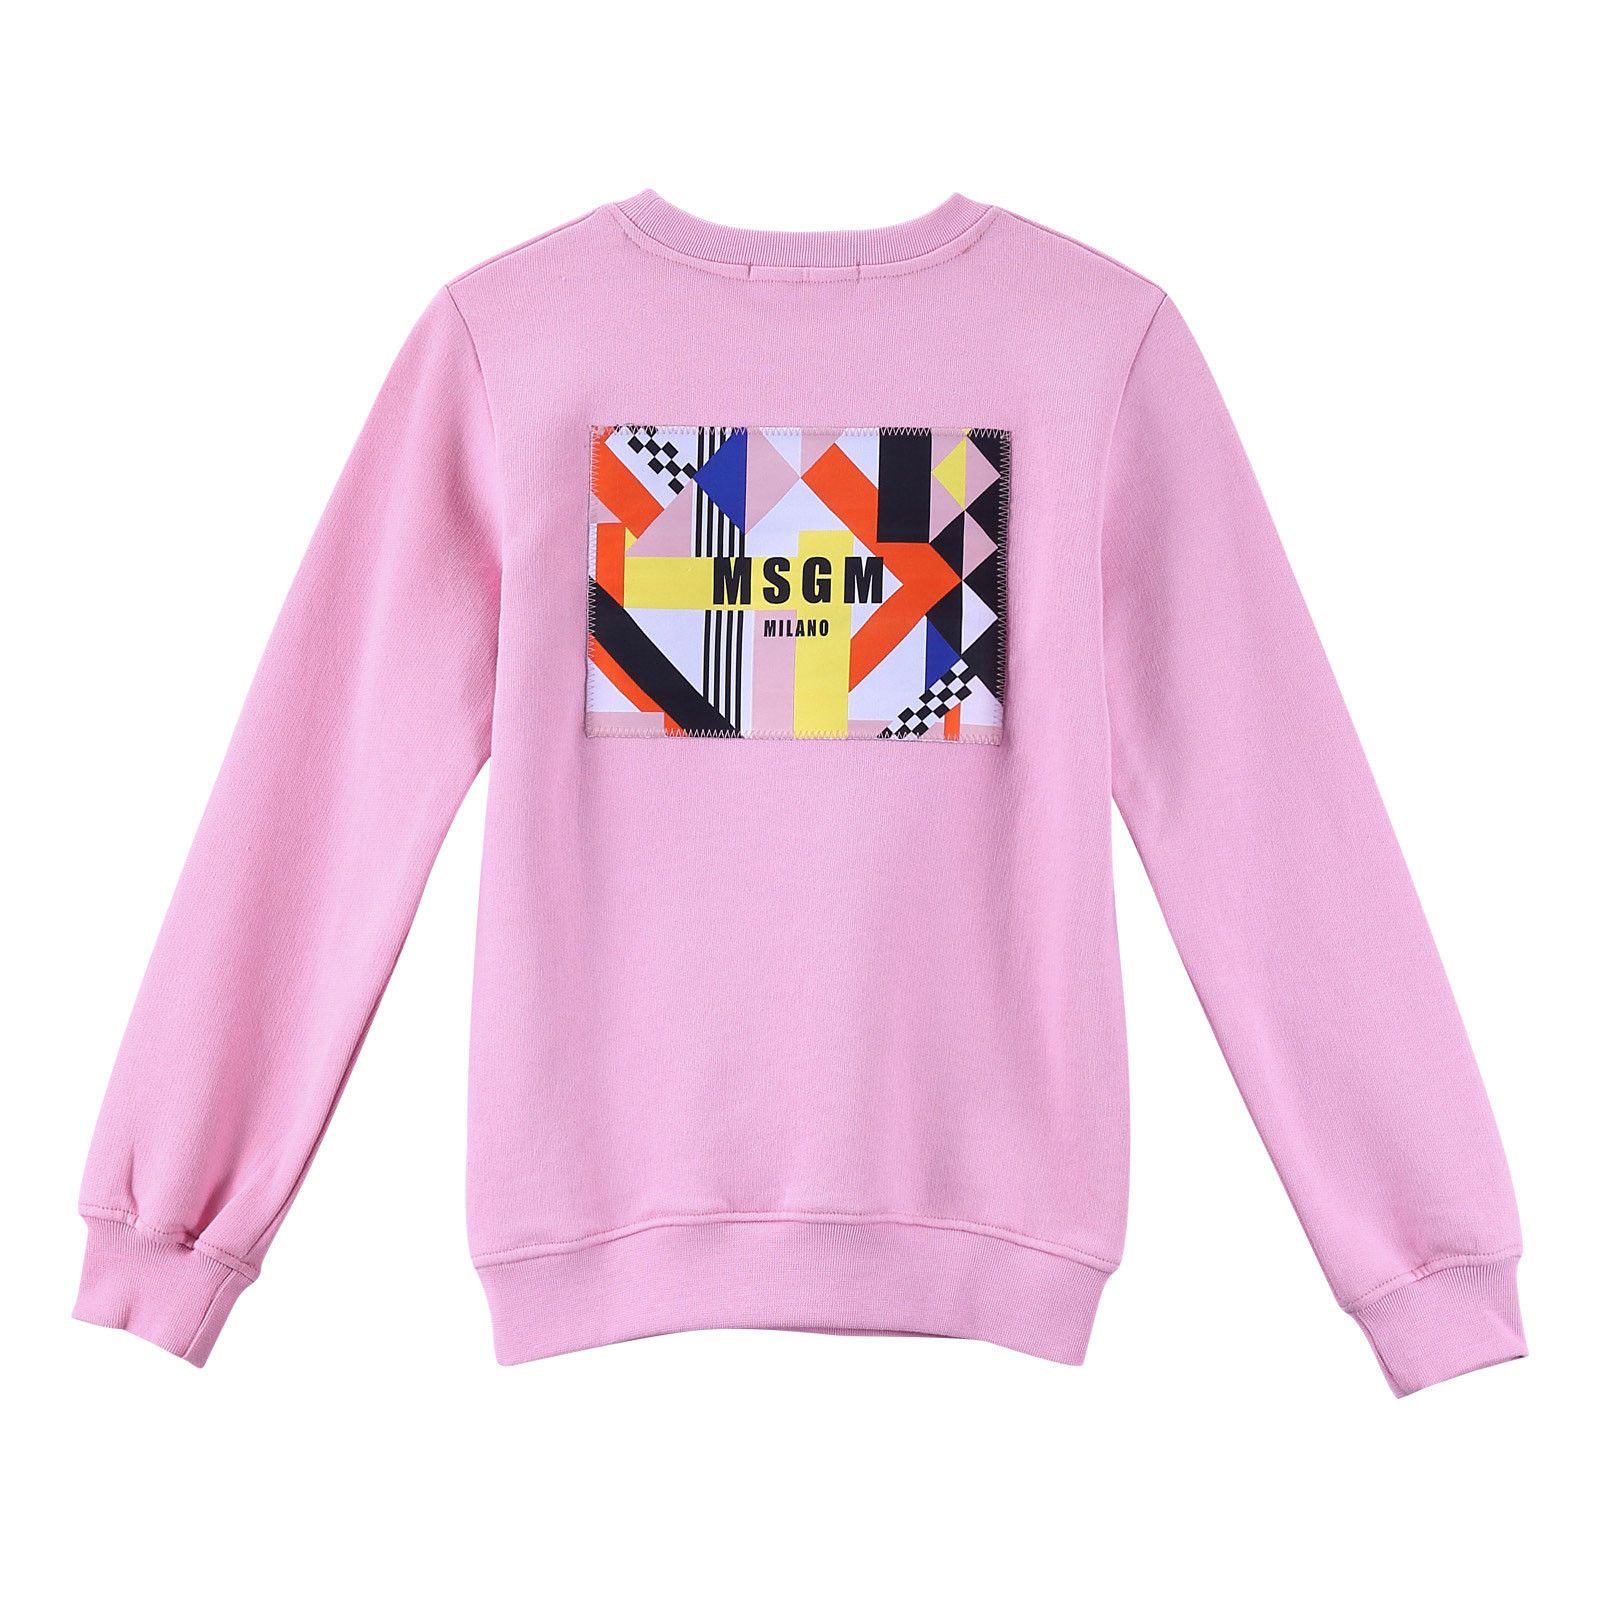 Girls Pink Cotton Sweatshirt With Ribbed Cuffs - CÉMAROSE | Children's Fashion Store - 2